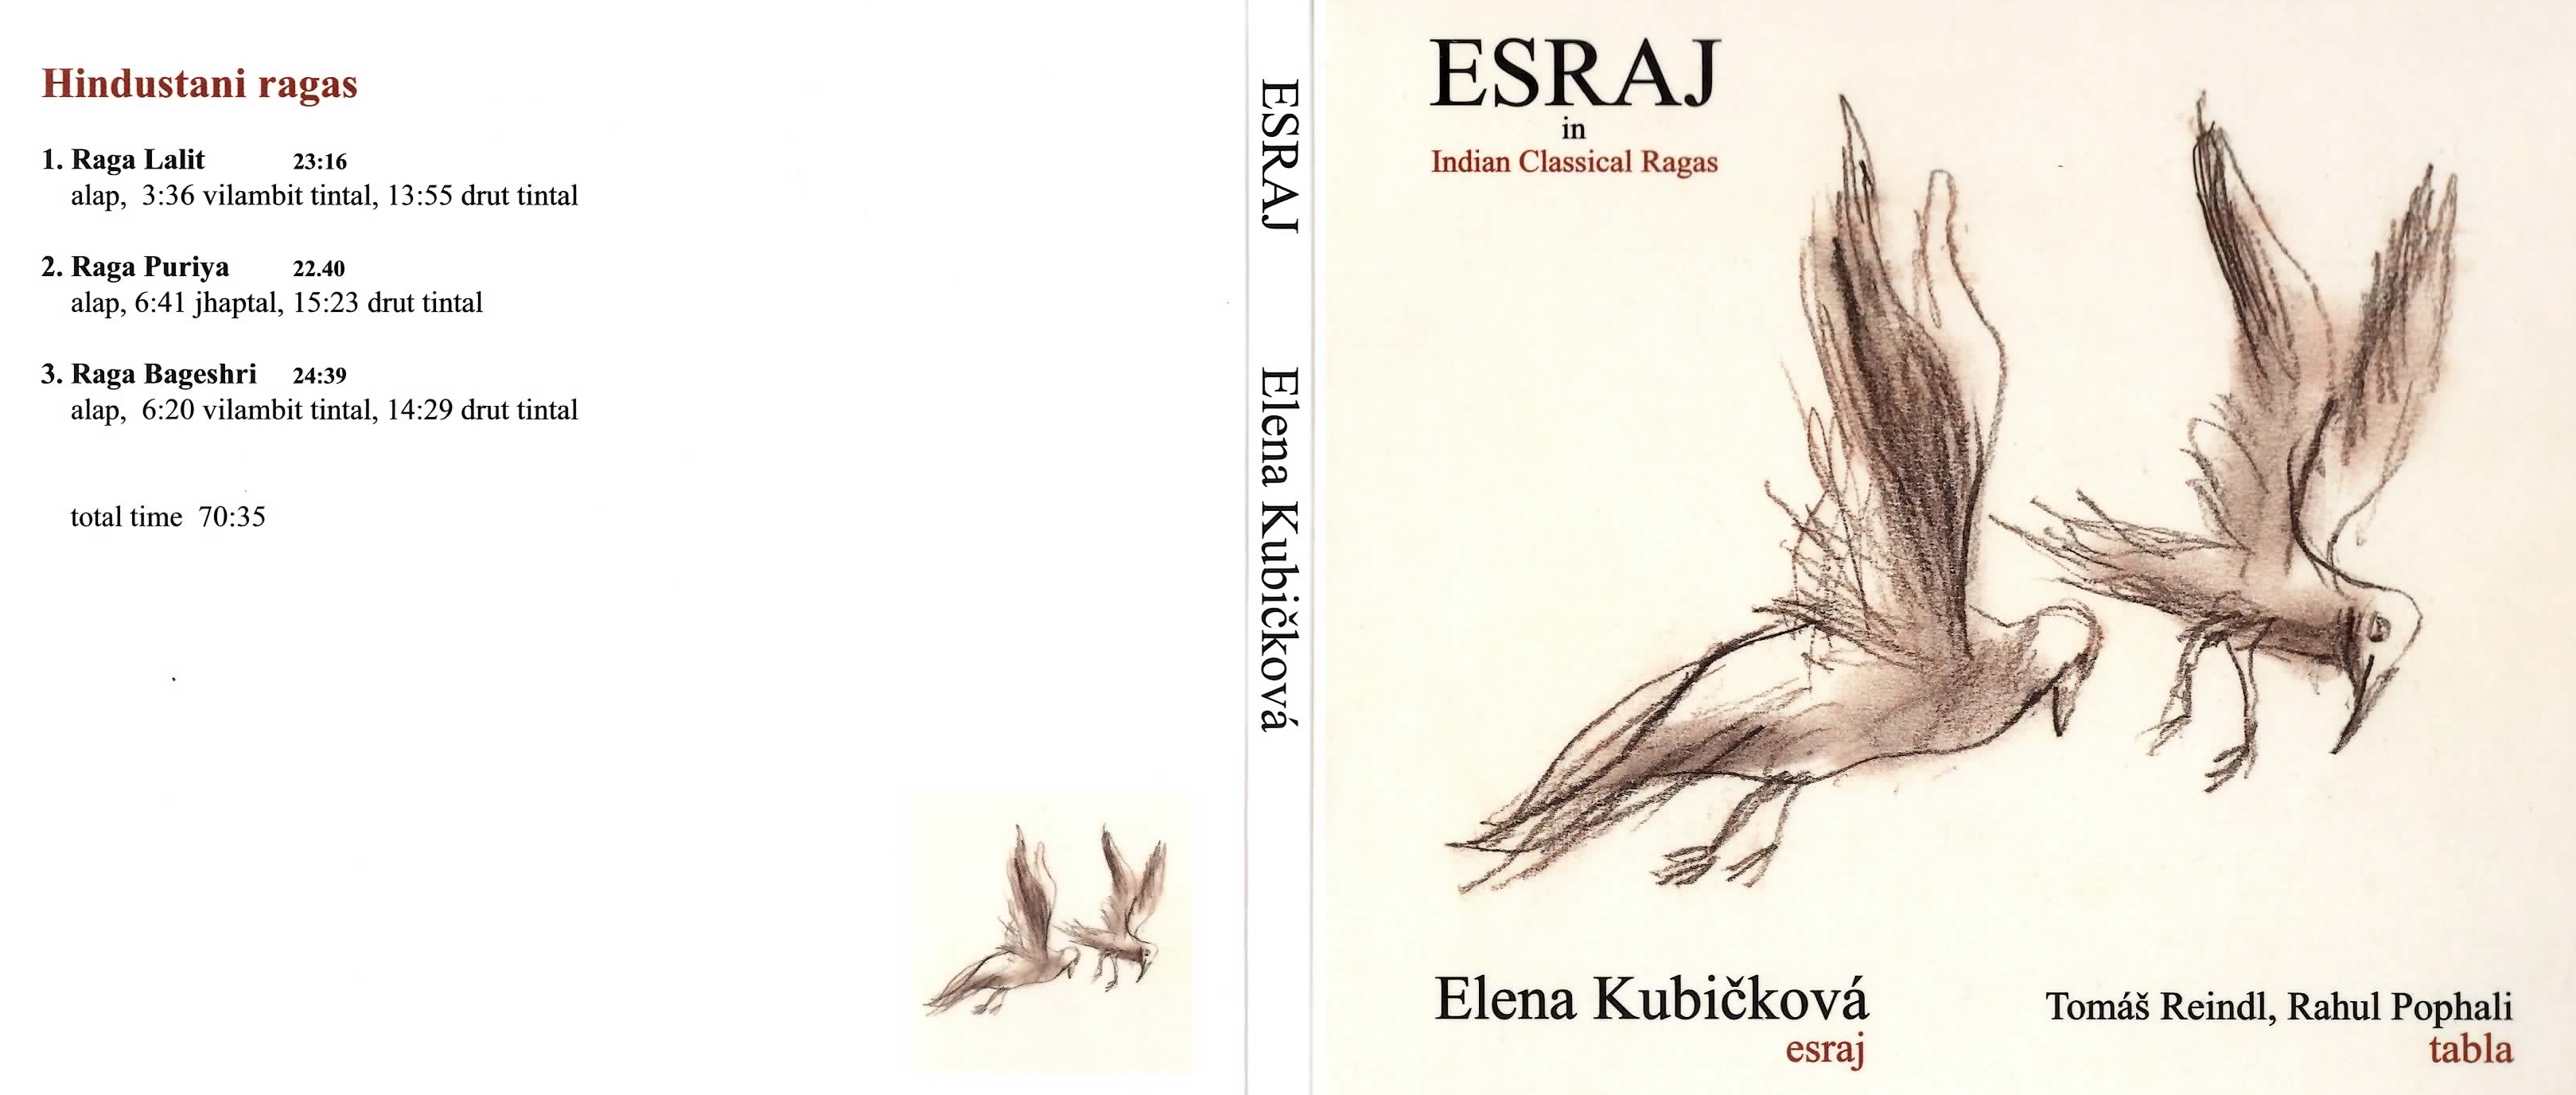 Elena Kubickova - ESRAJ